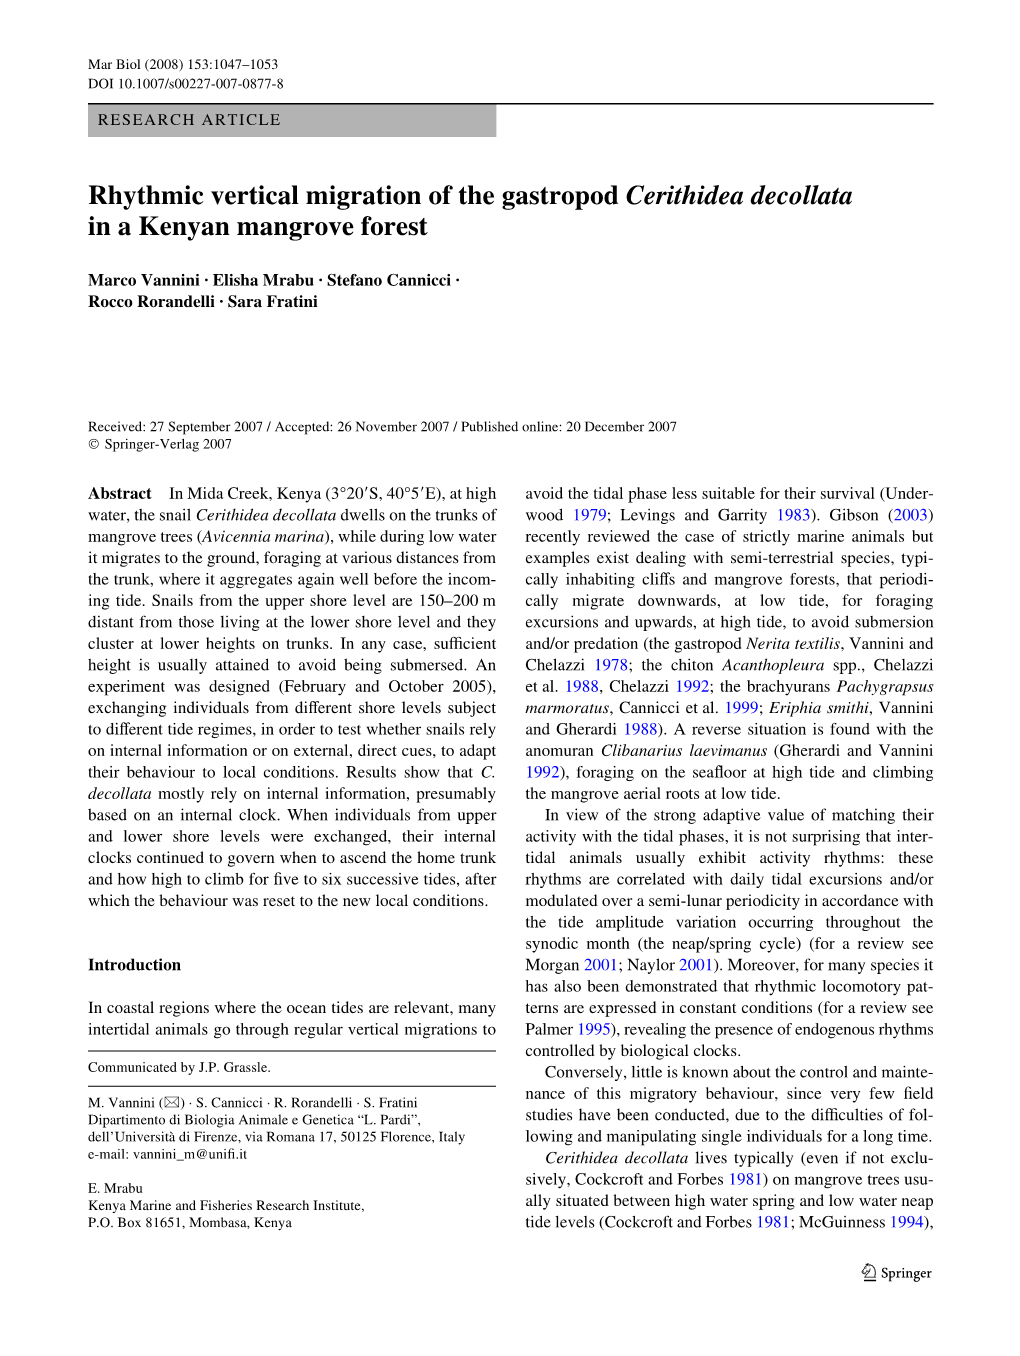 Rhythmic Vertical Migration of the Gastropod Cerithidea Decollata in a Kenyan Mangrove Forest